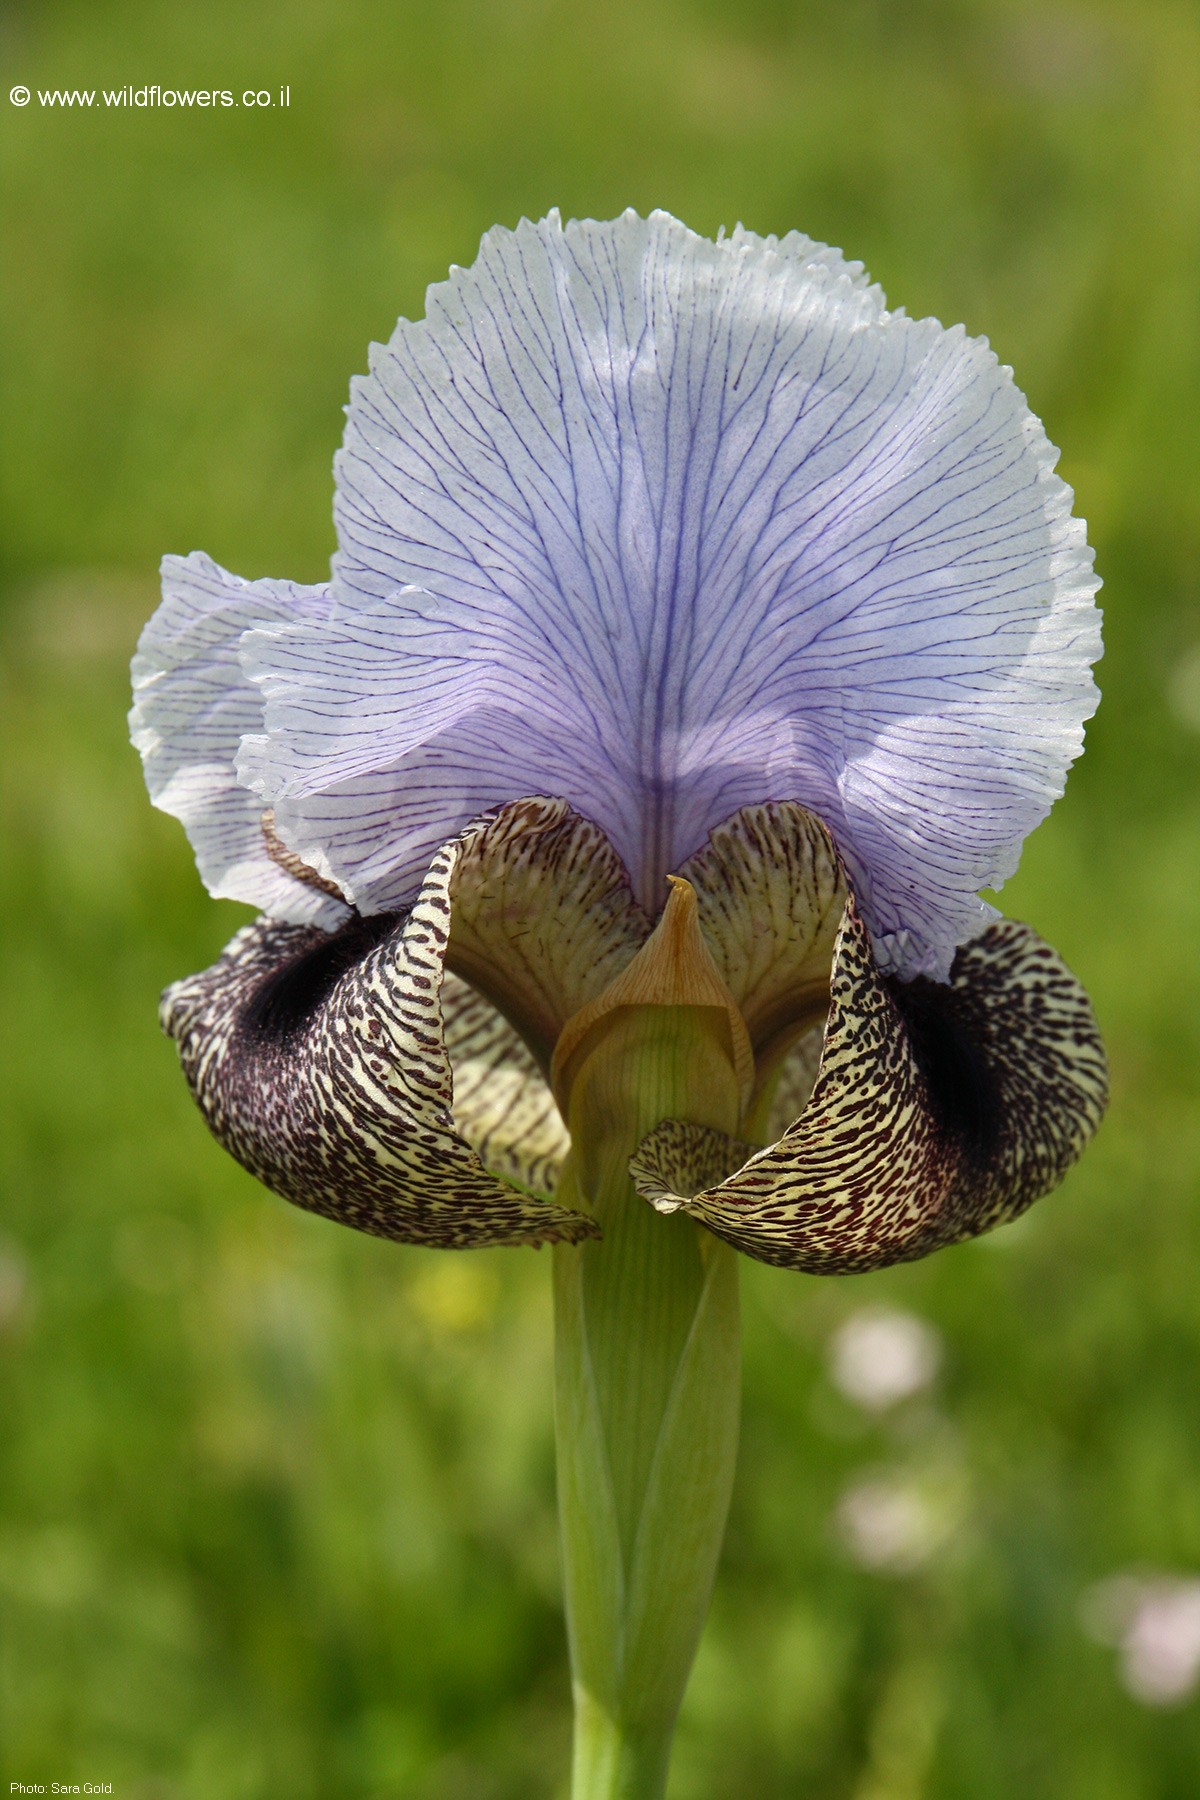 Iris hermona